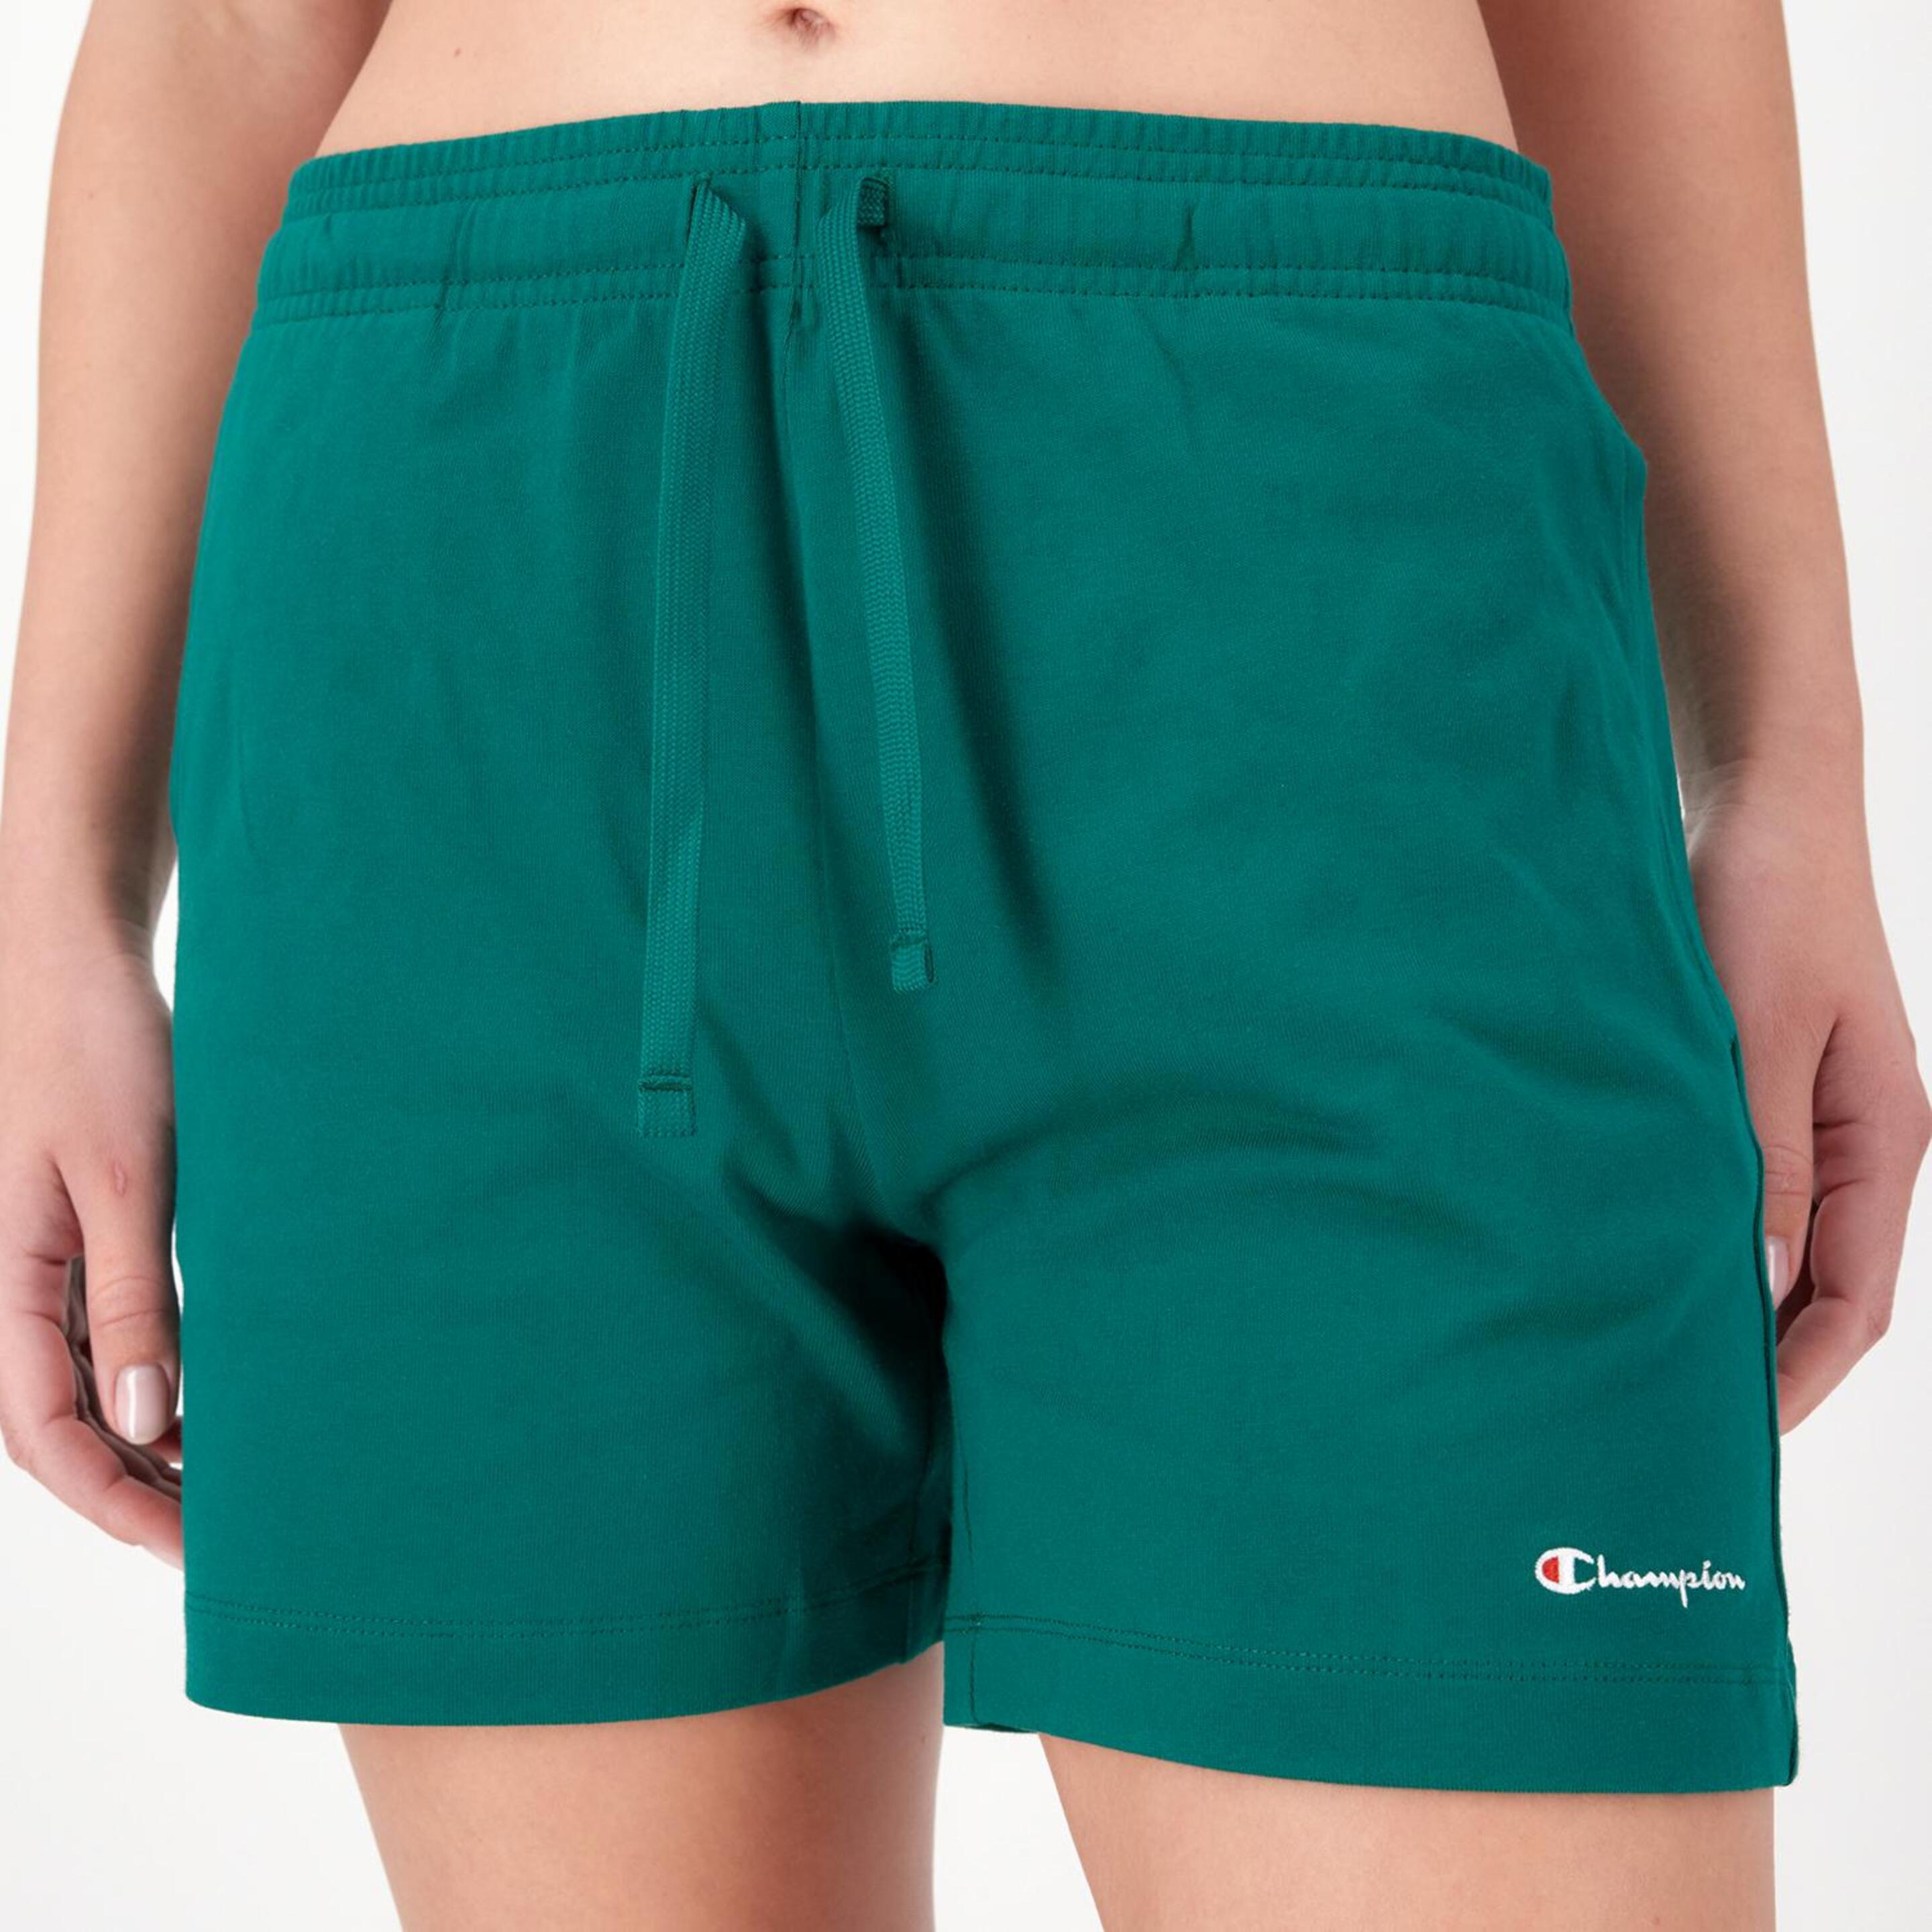 Pantalón Champion - verde - Pantalón Corto Mujer